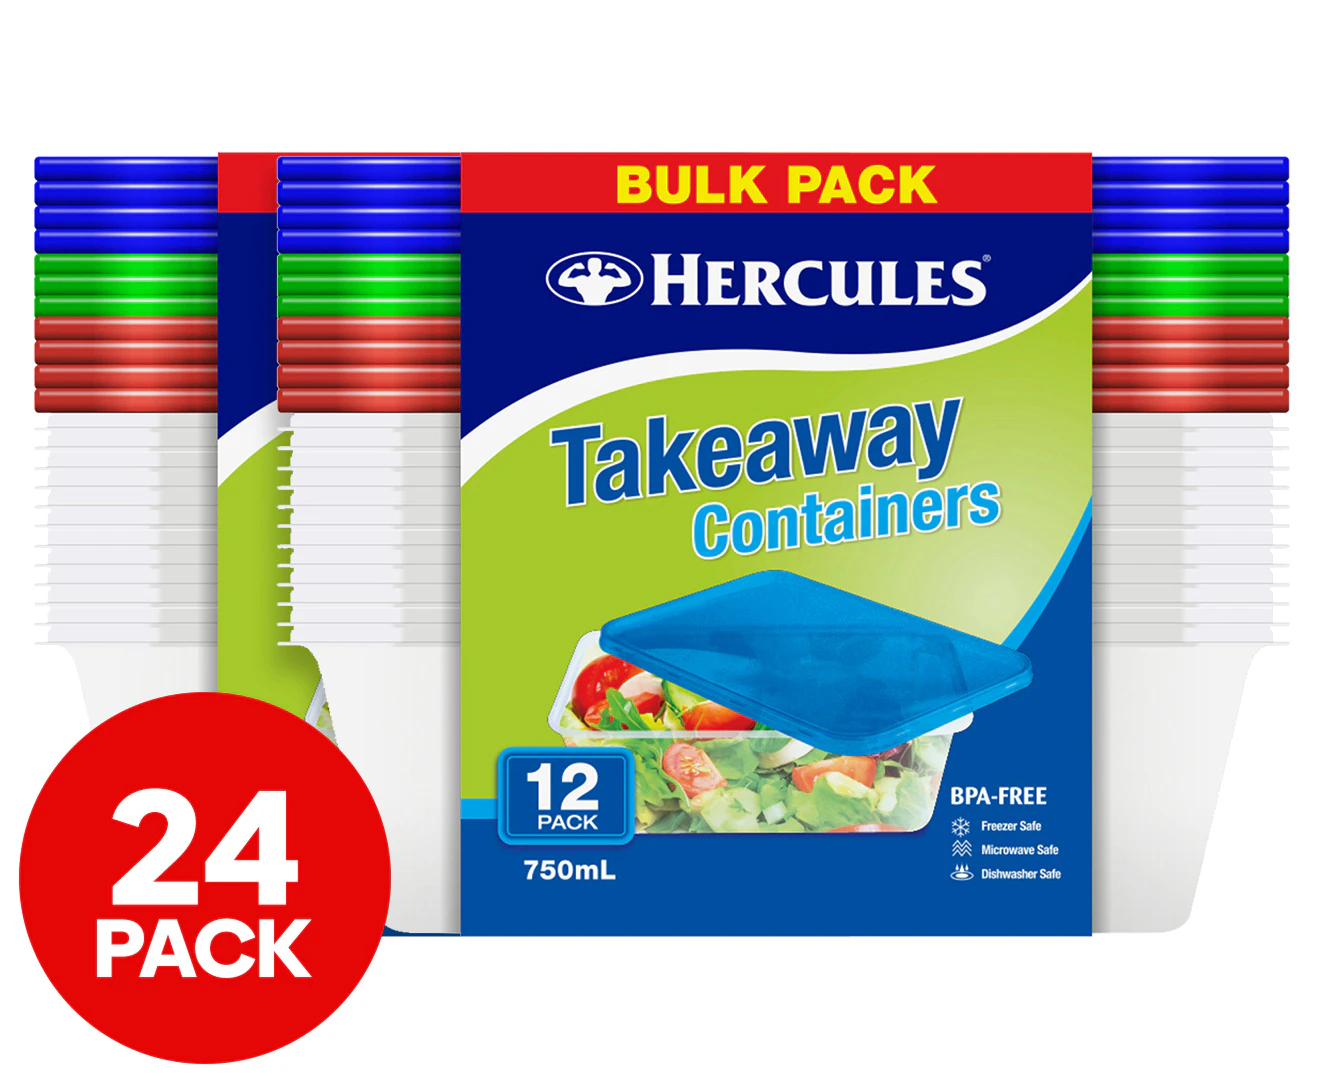 Gel Pens, Assorted Colors, 9 Count,Office & School Pens for Women